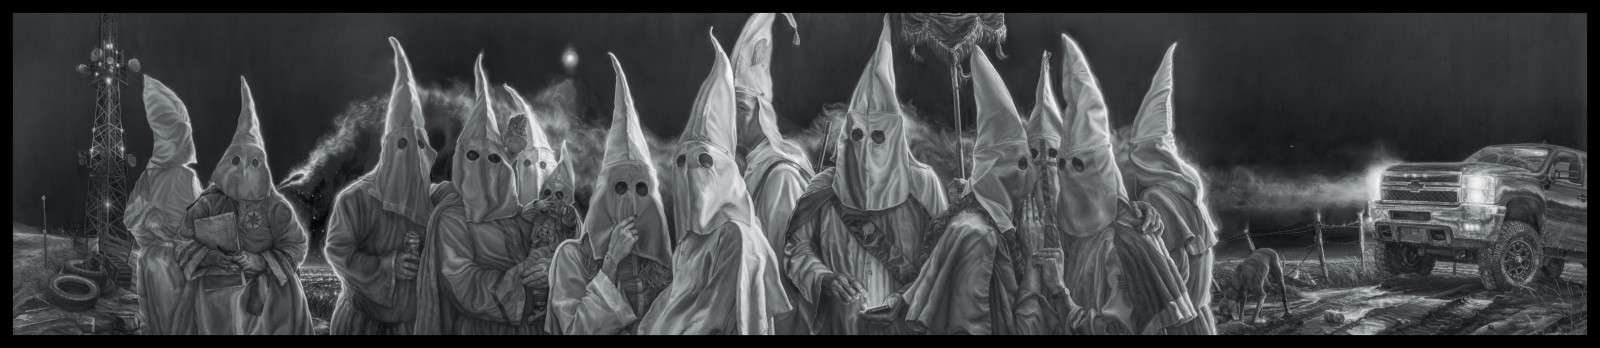 油漆, 现实, 模仿, 艺术家Vincent Valdez, Ku Klux Klan